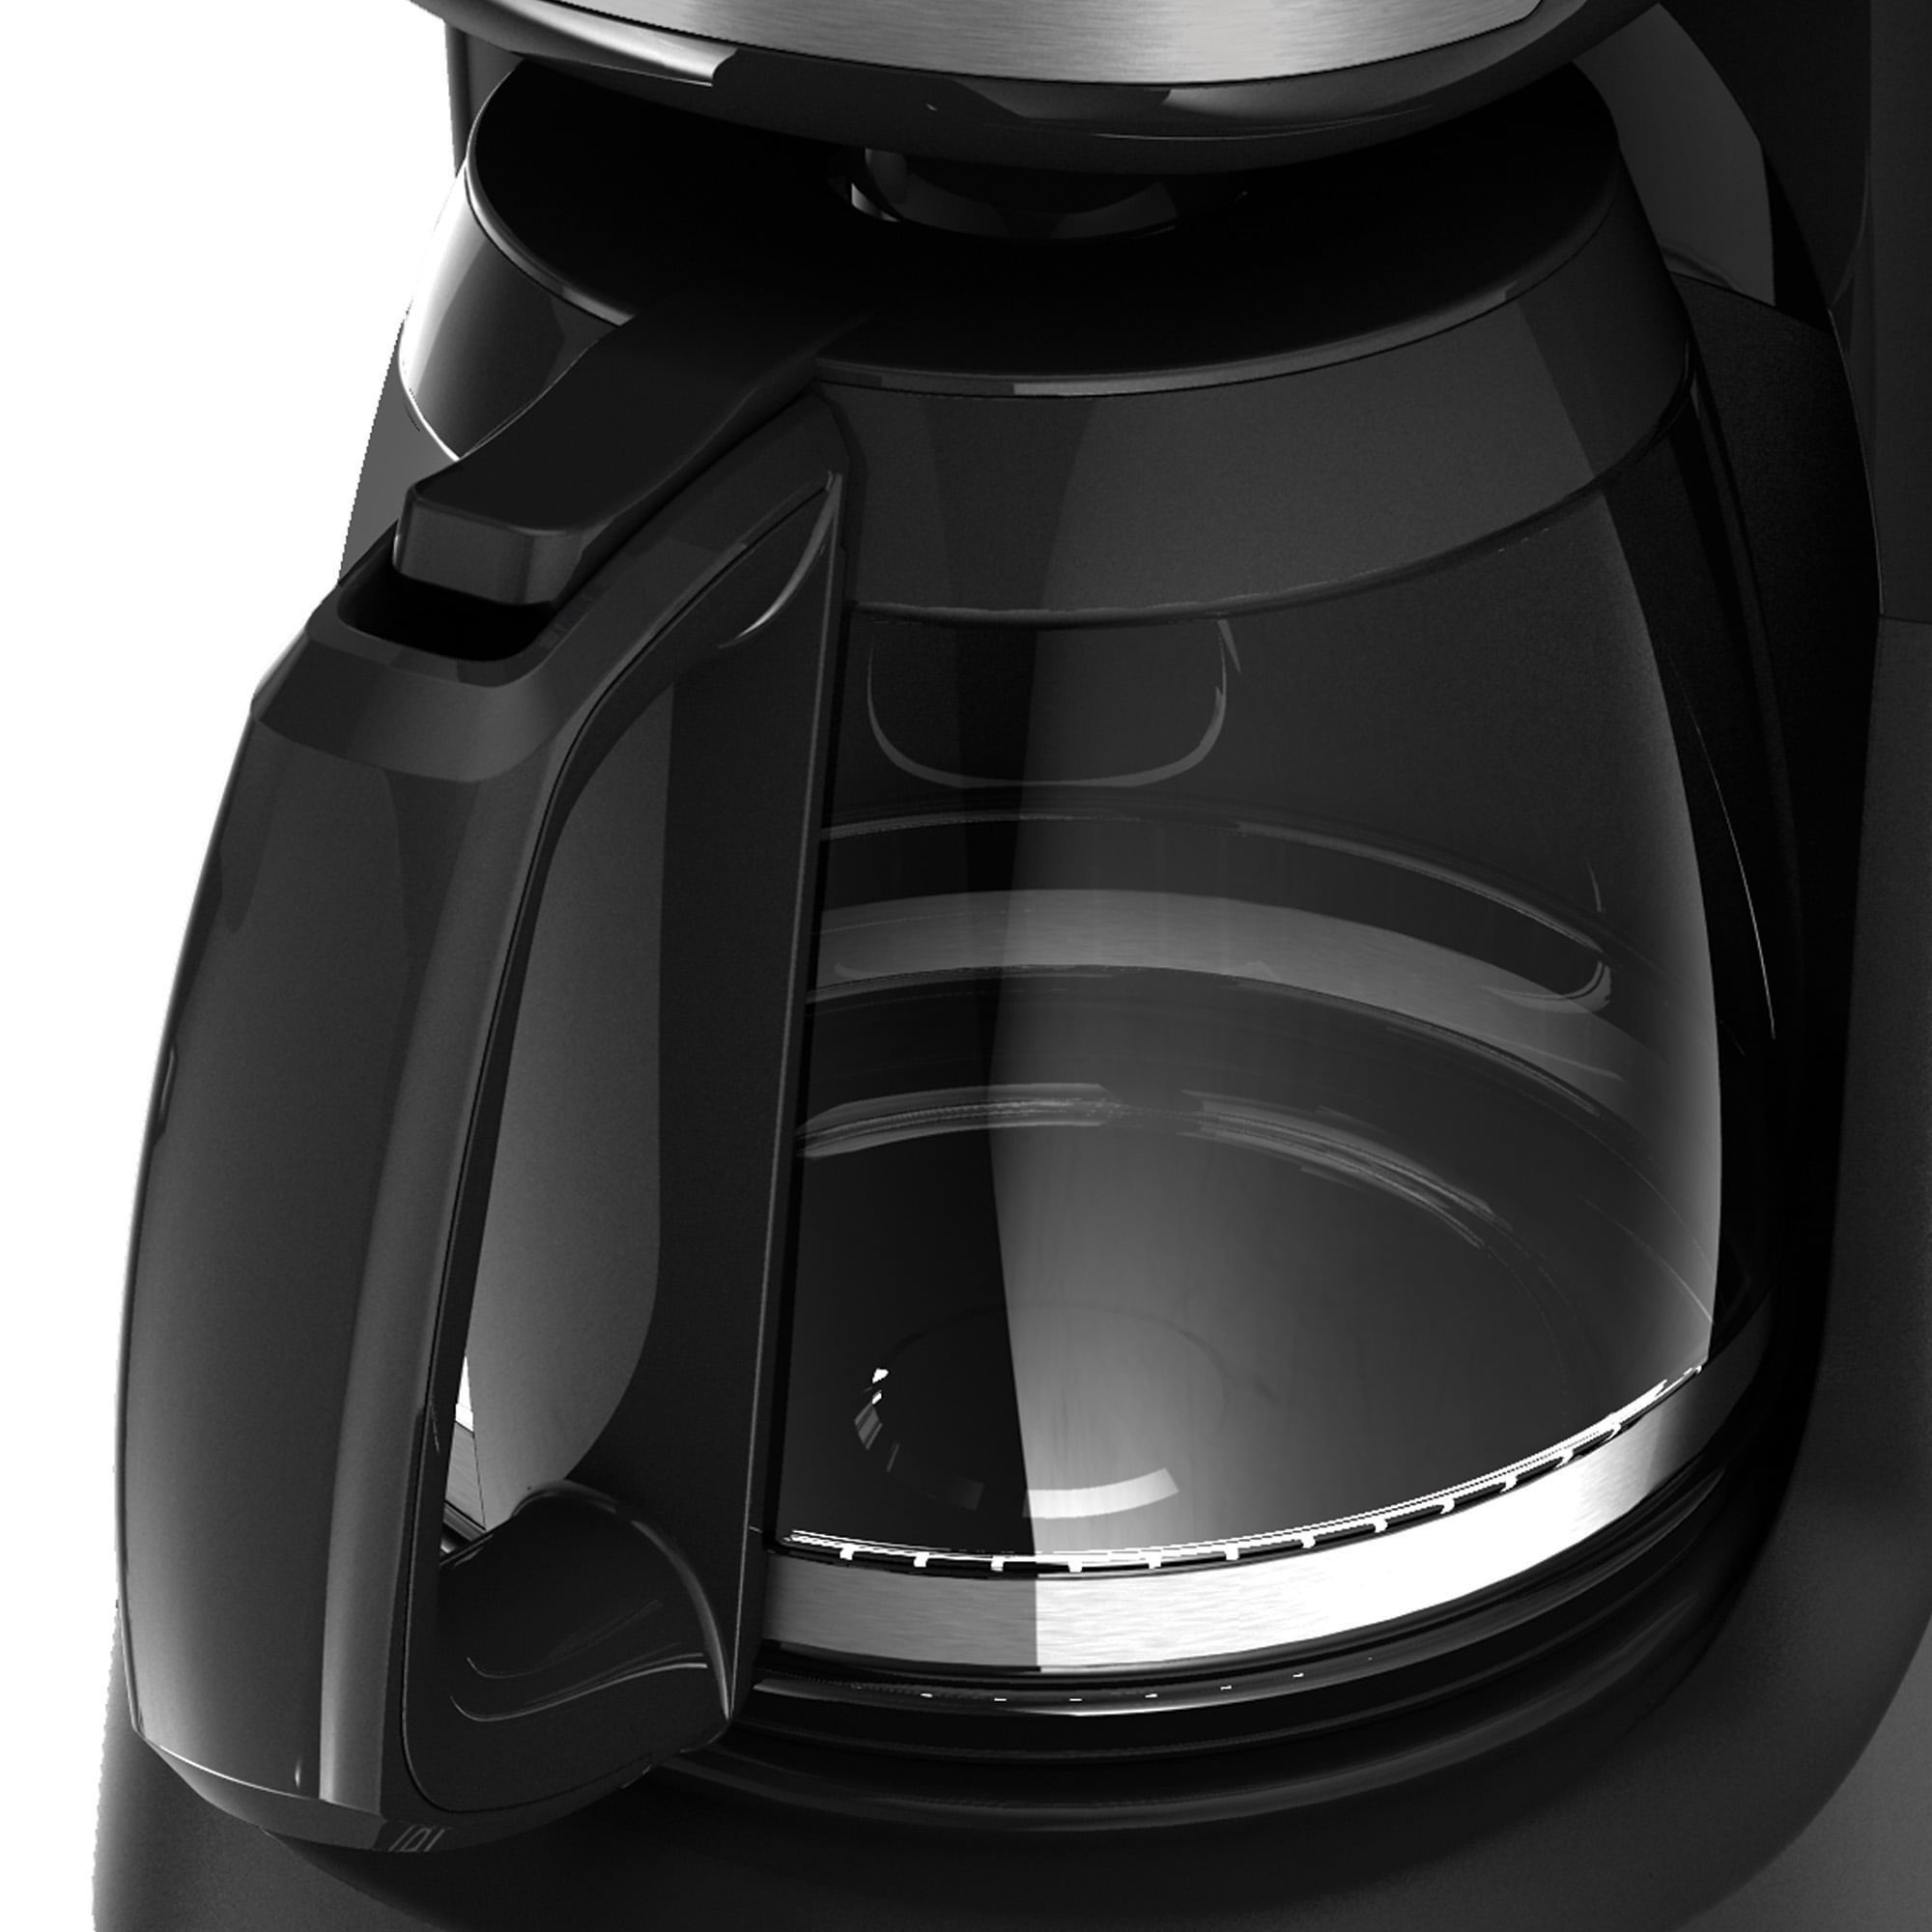 HOW TO PROGRAM AUTO BREW BLACK + DECKER 12 Cup Programmable Coffee Maker  Set Time CM2030B 